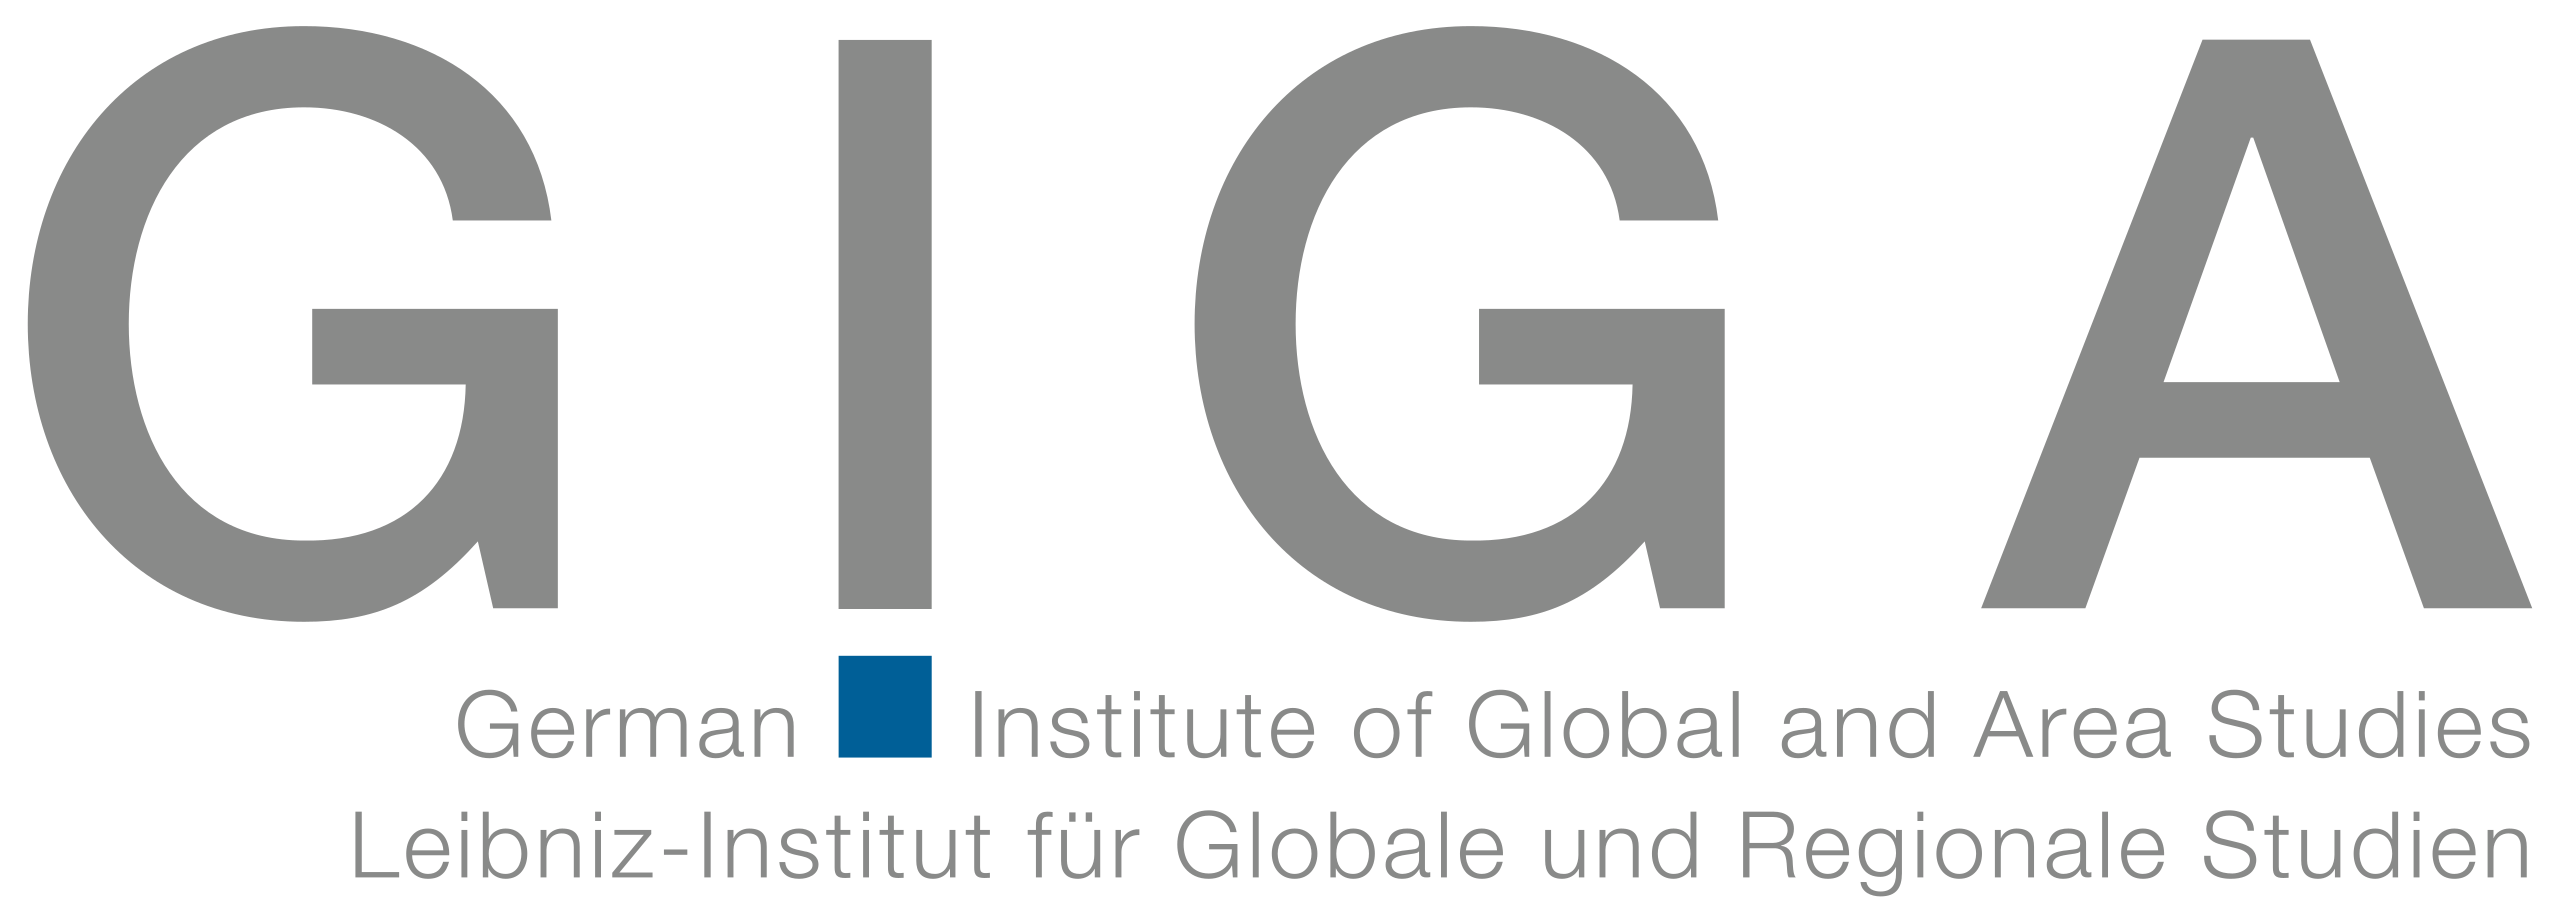 German Institute of Global and Area studies